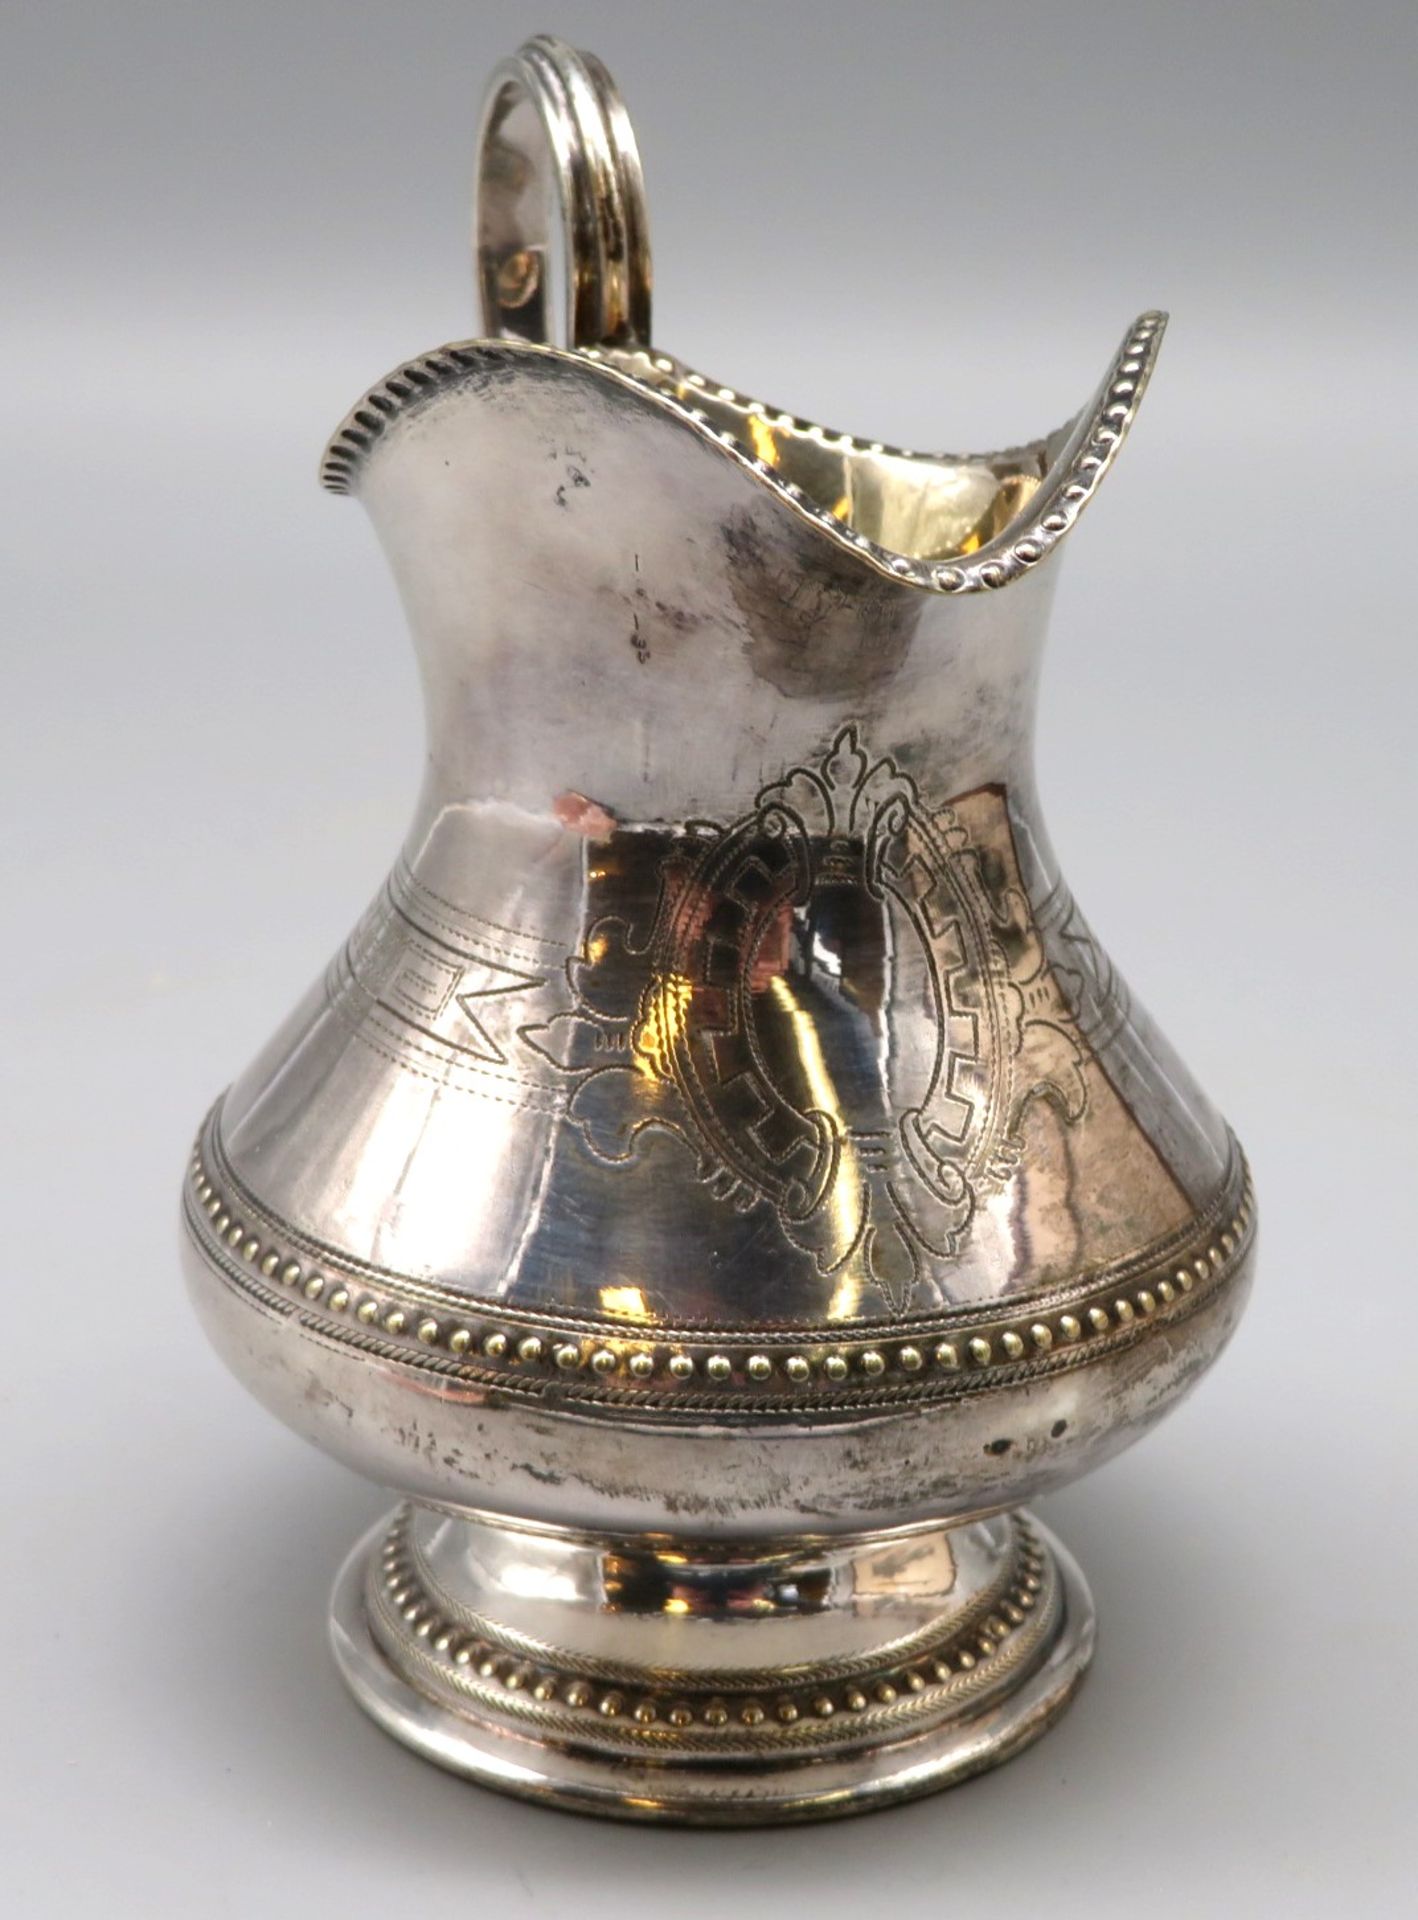 Sahnekännchen, 19. Jahrhundert, Silber 800/000, geprüft, 150 g, Innenvergoldung, umlaufender Perlra - Image 2 of 2